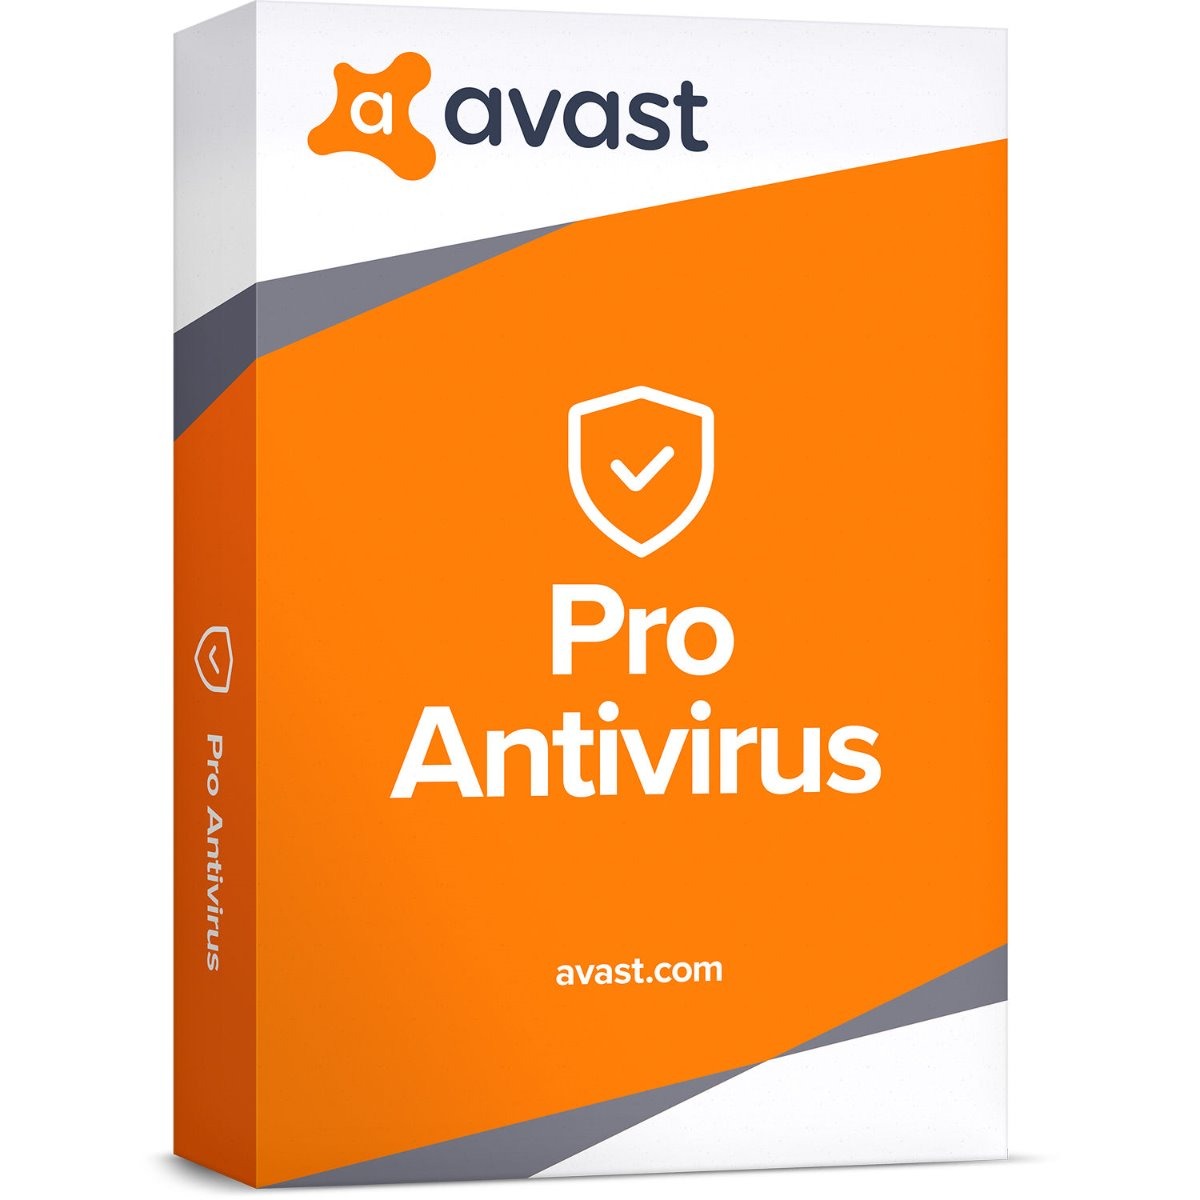 avast antivirus full version free download with key